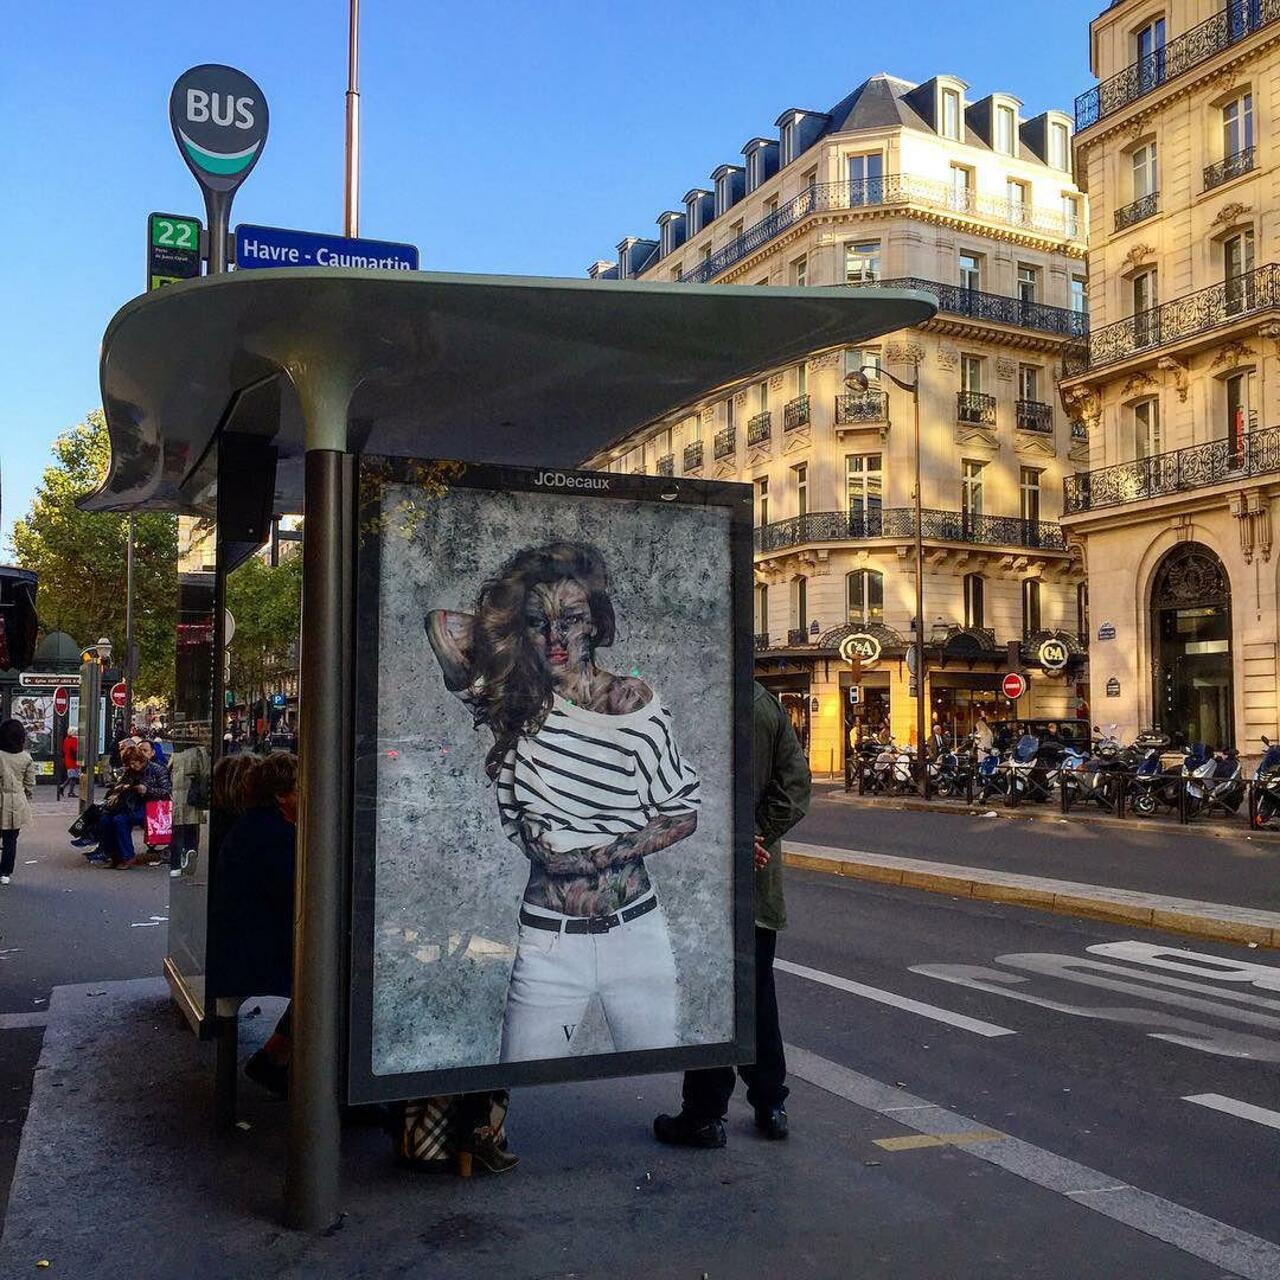 #Paris #graffiti photo by @hookedblog http://ift.tt/1j3nwud #StreetArt http://t.co/Fv7oalovg7